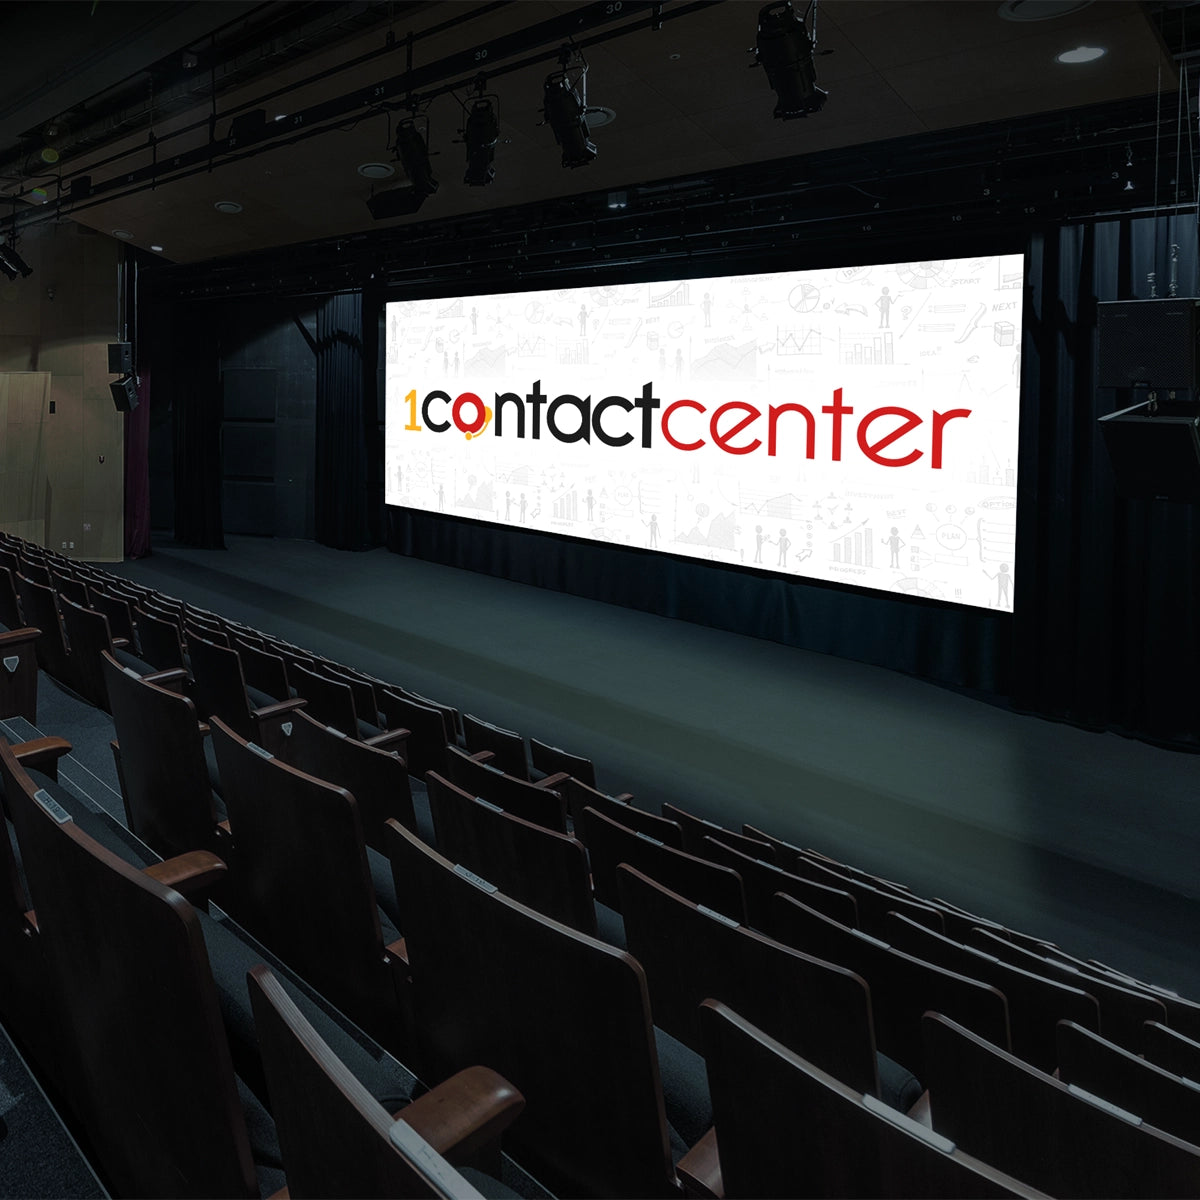 1contactcenter.com